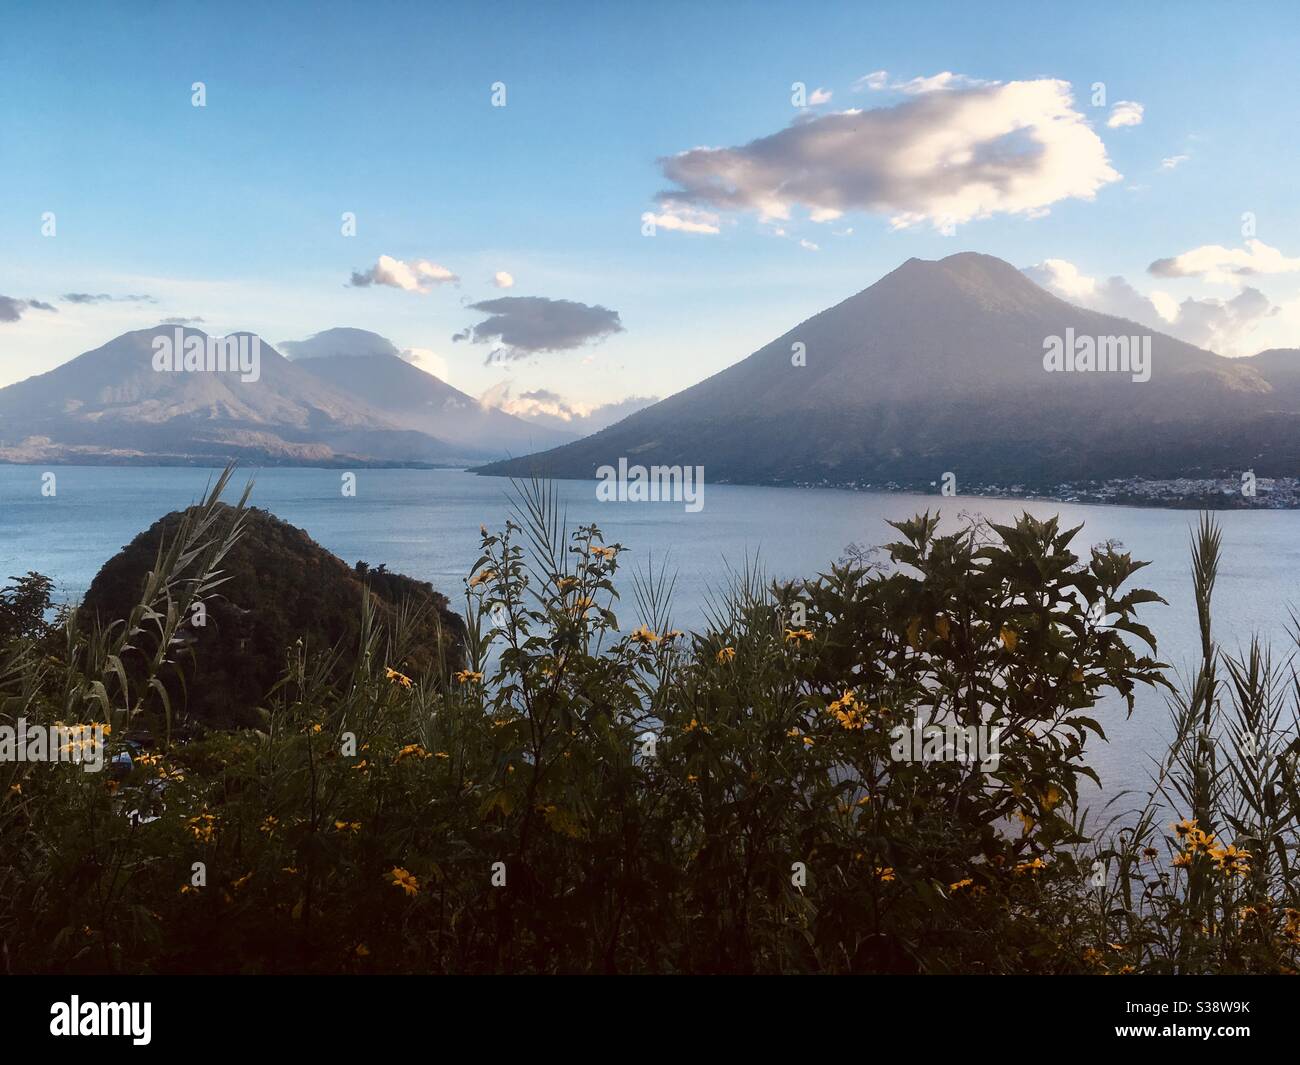 Volcanoes surrounding lake with flowers. Lago de Atitlan, Guatemala. Stock Photo